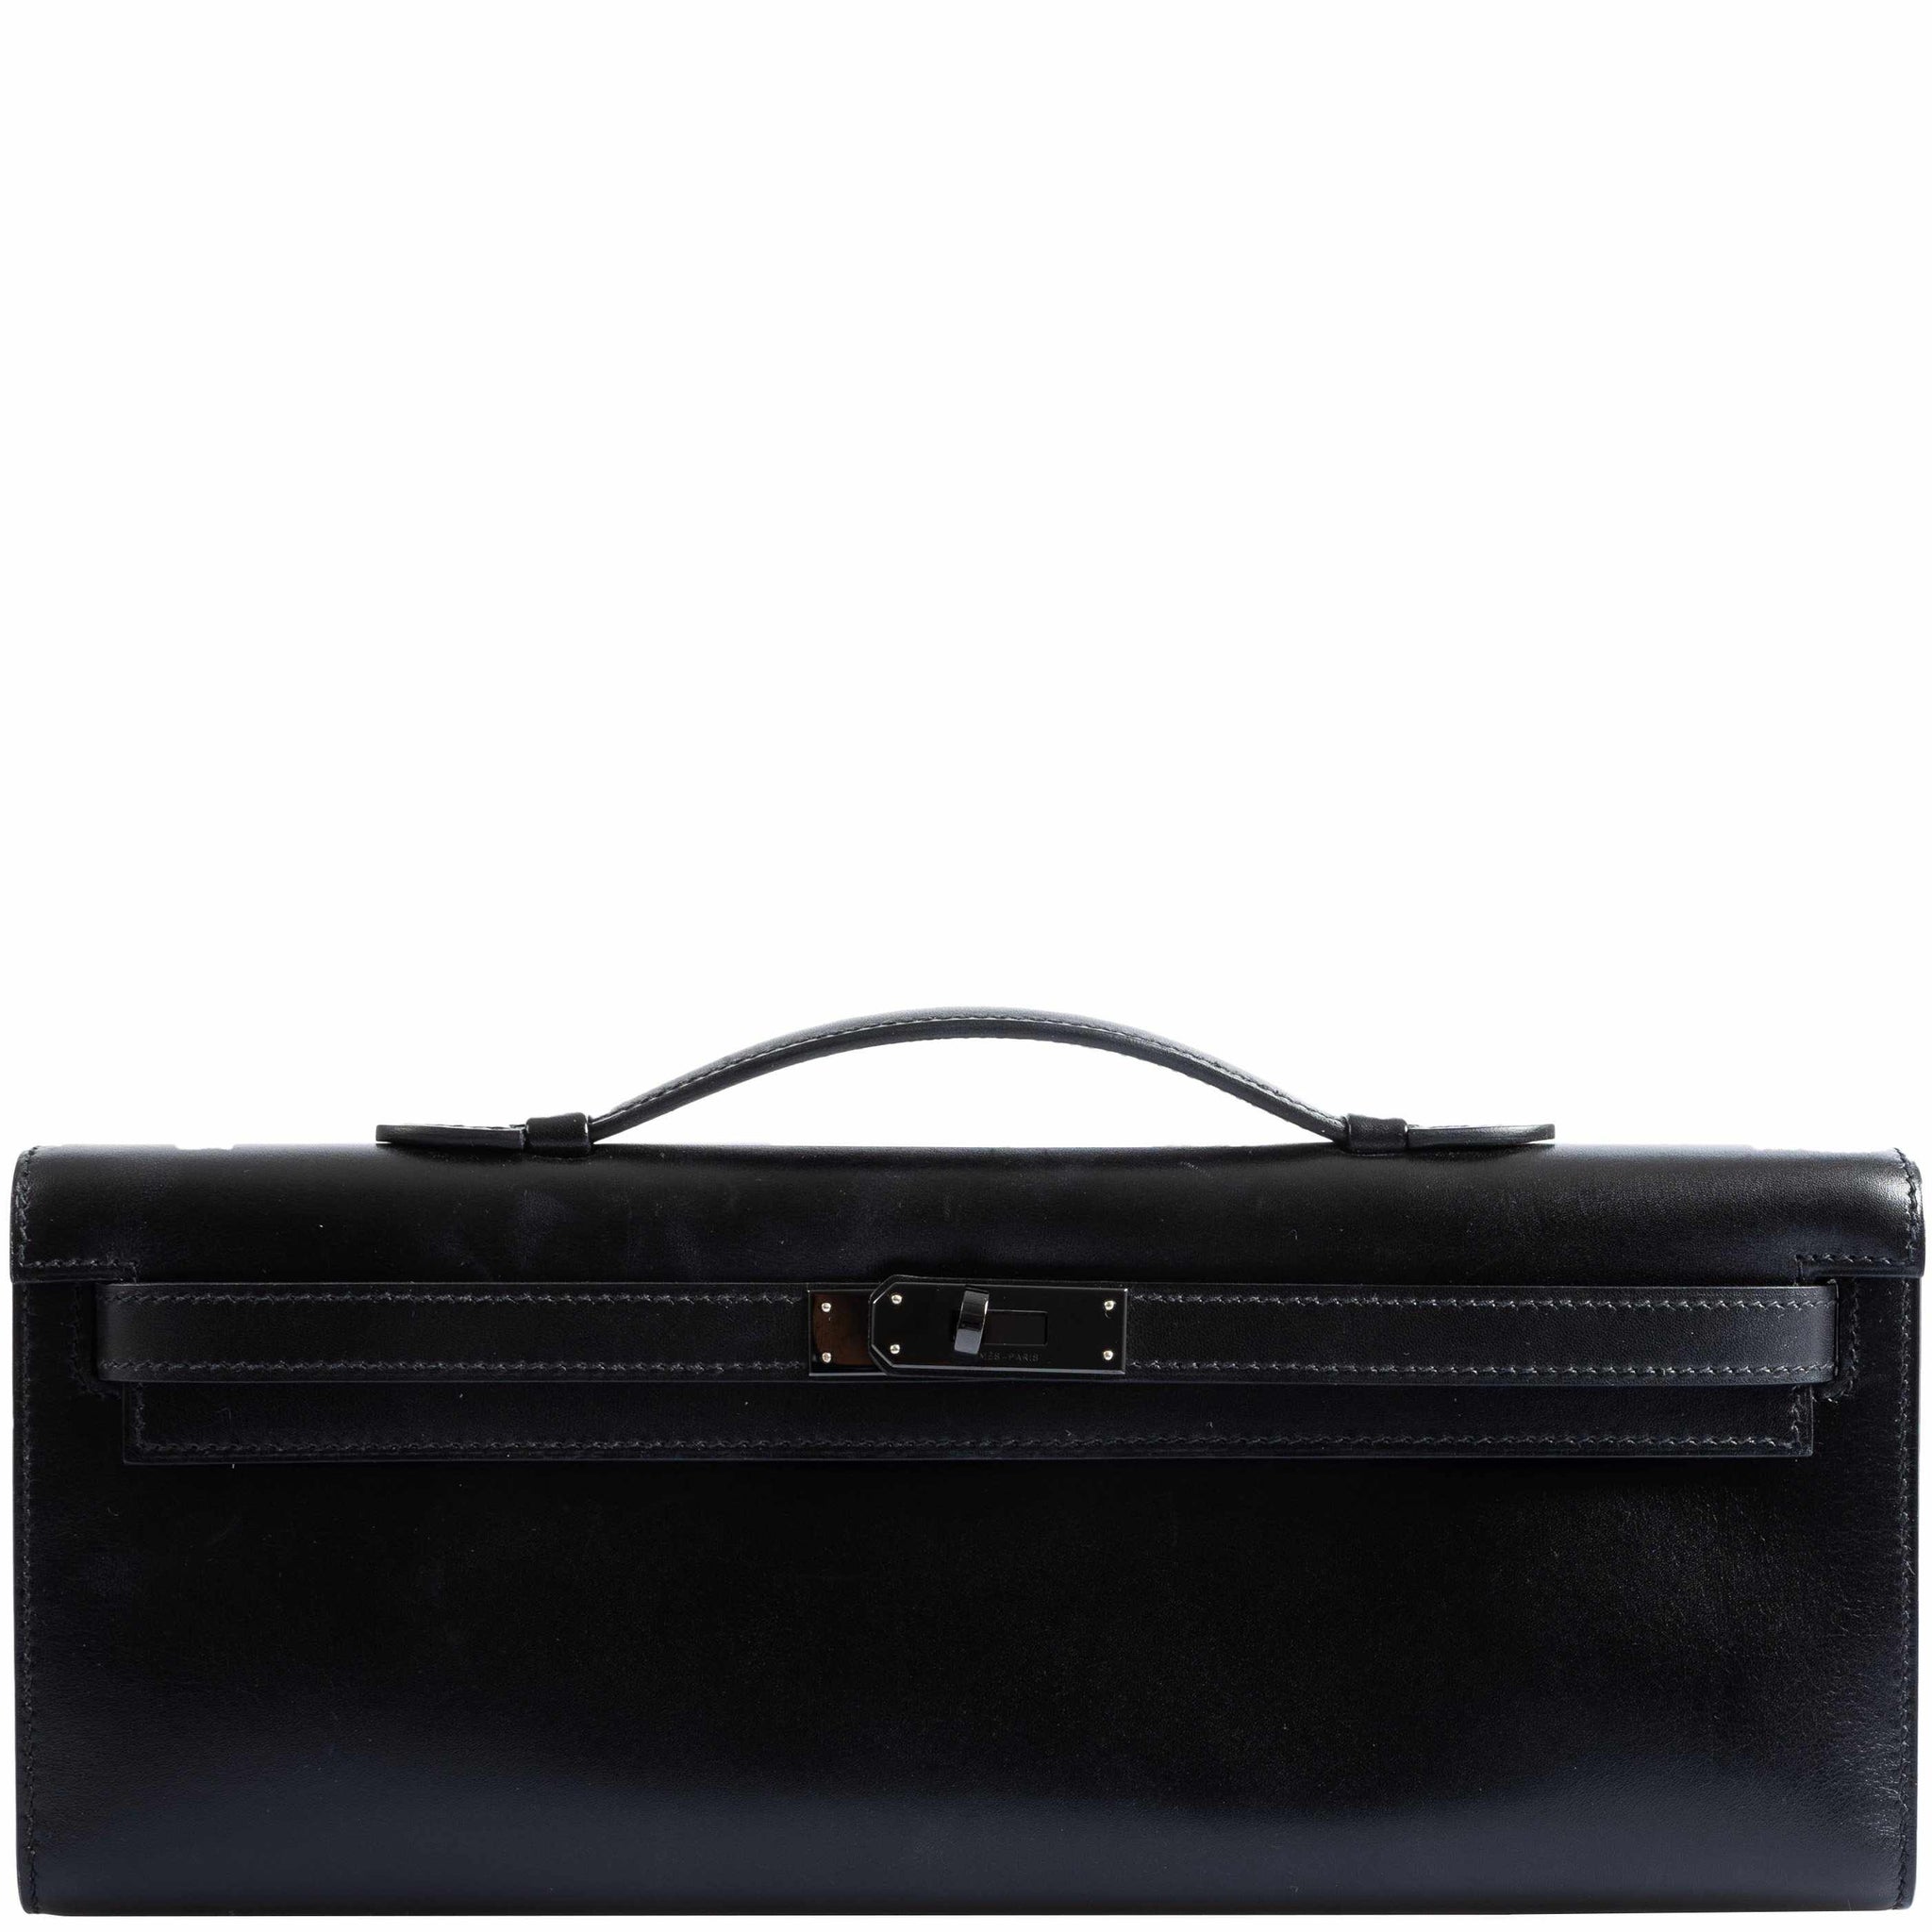 2011 Hermes Black Box Calf Leather Vintage Kelly 32cm Sellier at